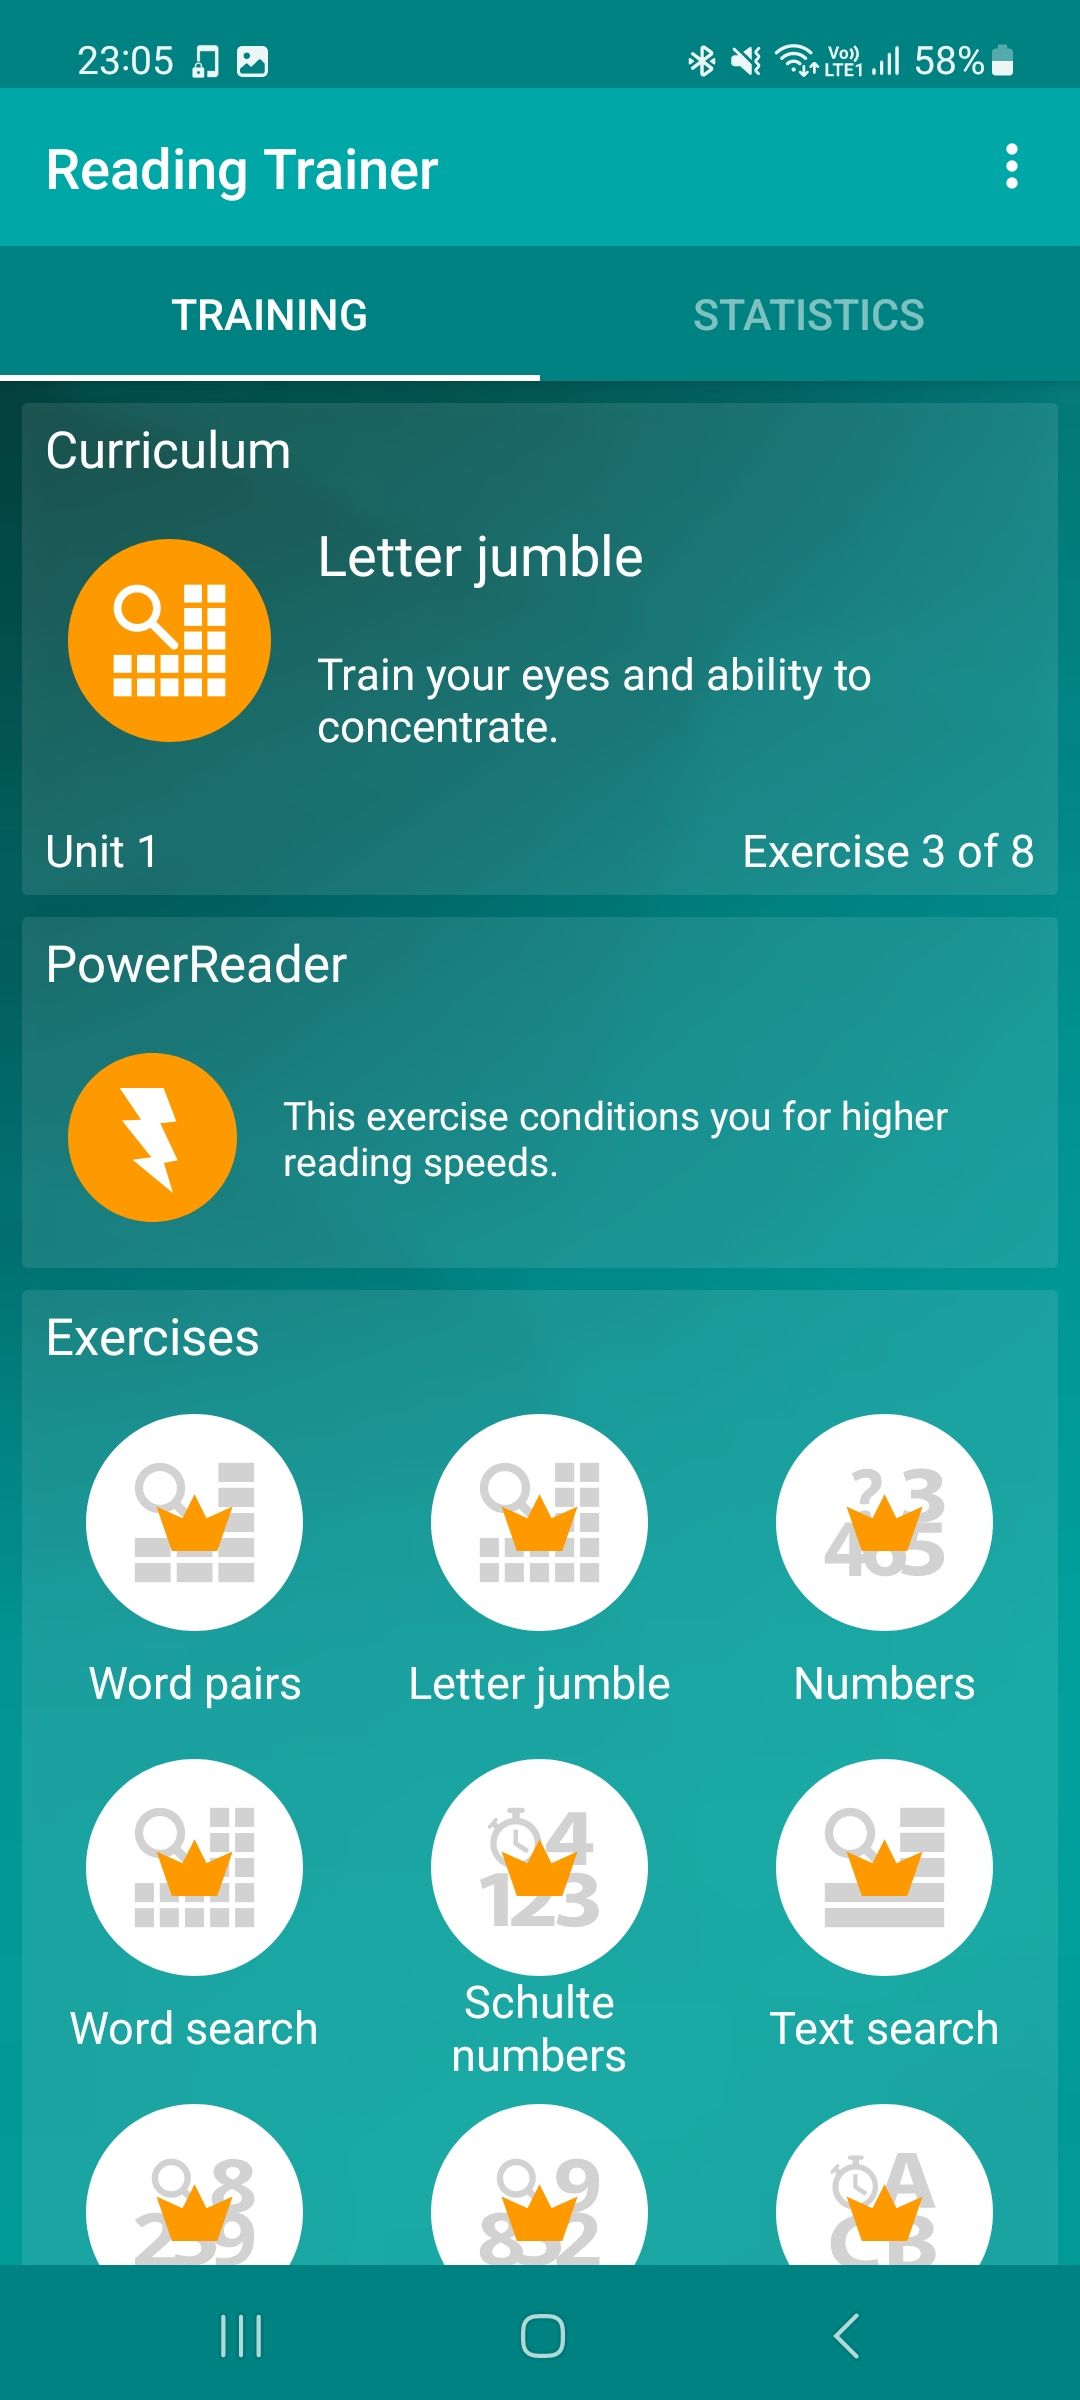 Range of reading speed exercises in Reading Trainer